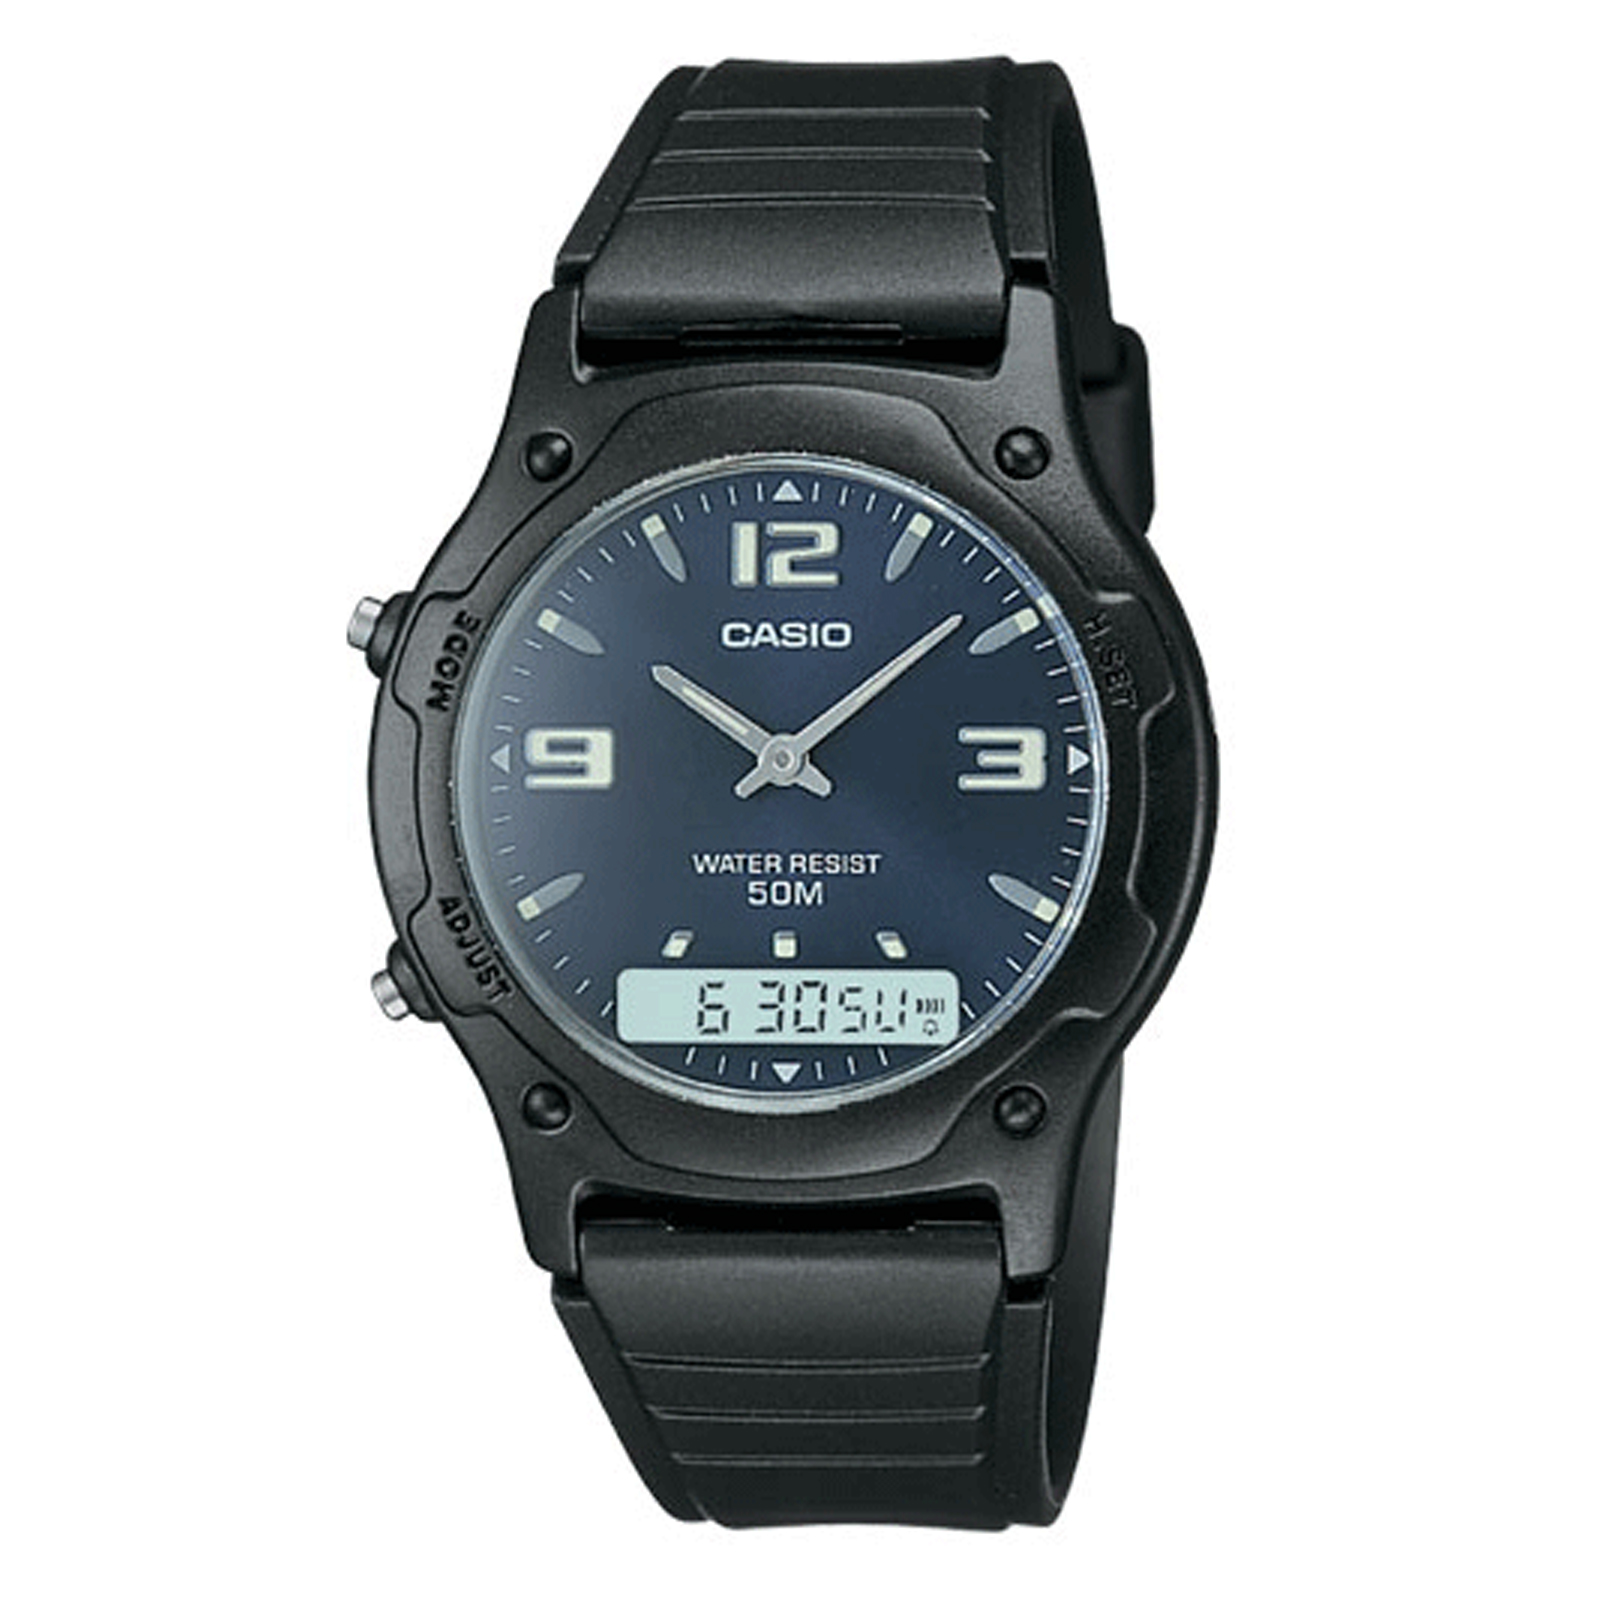 Casio Men's Resin Analog-Digital Dual Time Watch - Black